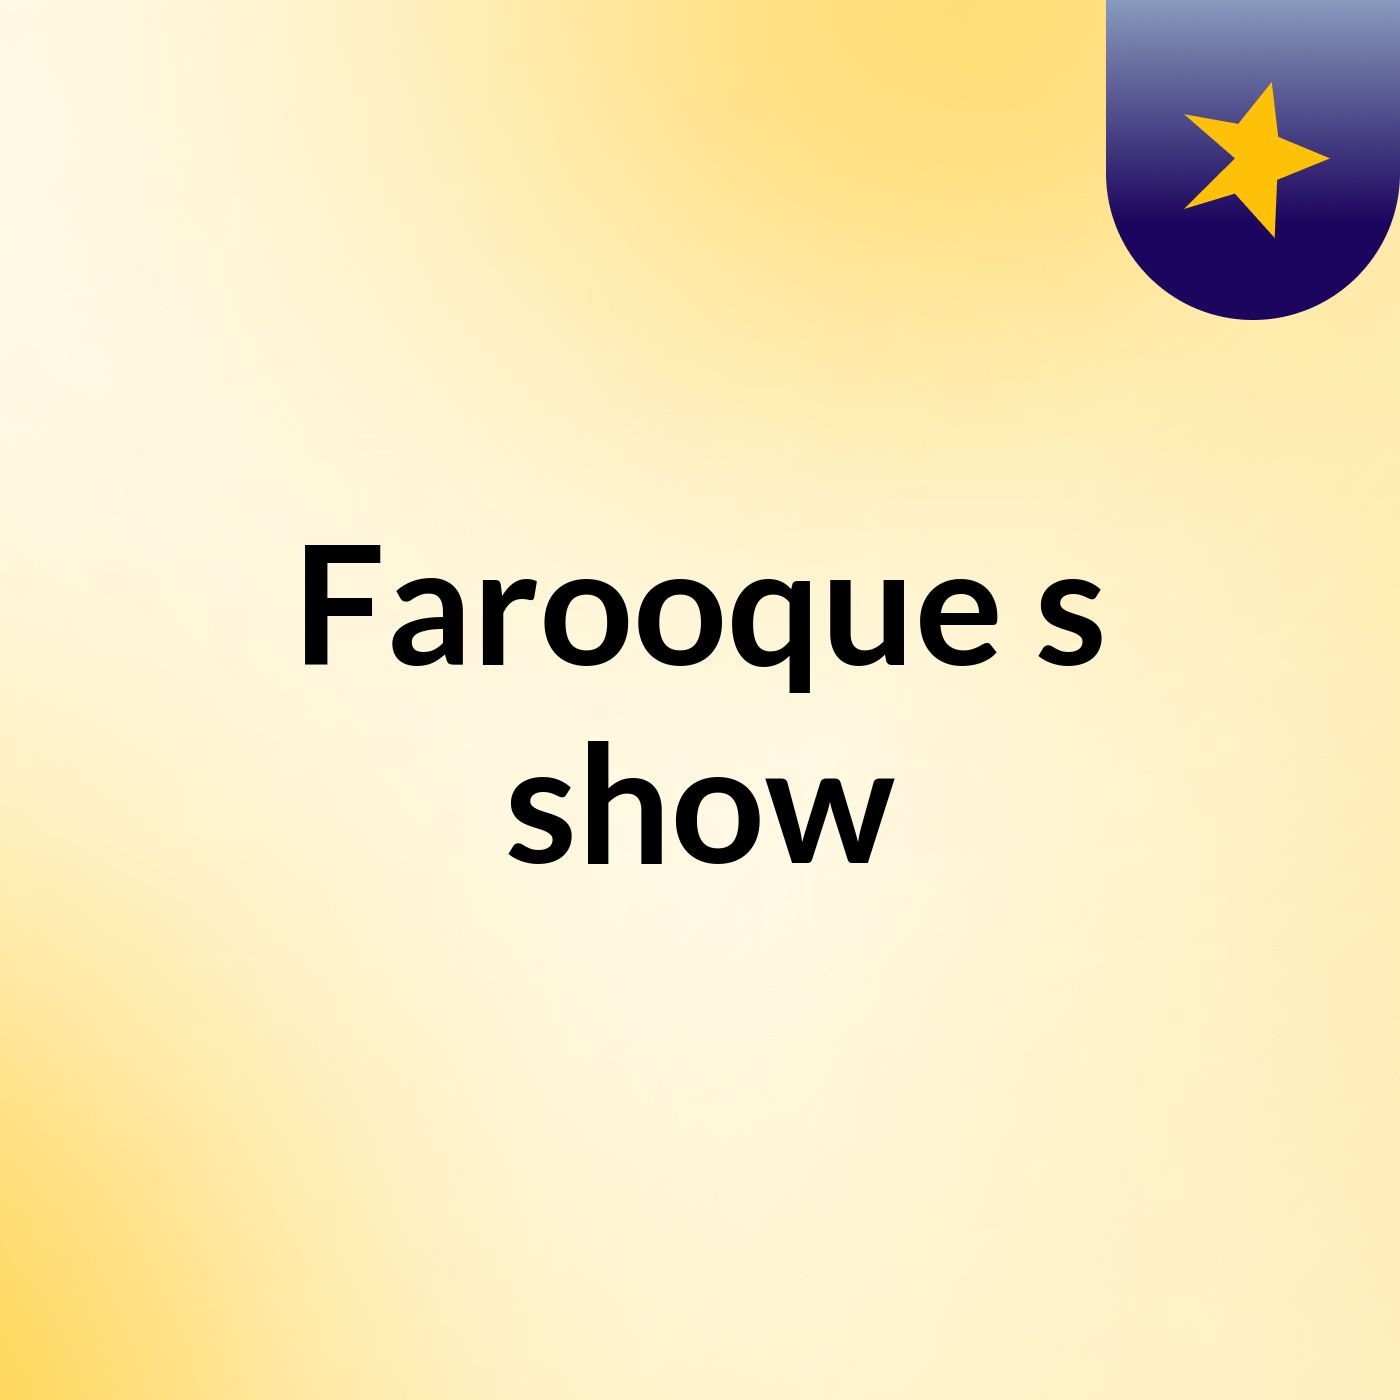 Farooque's show